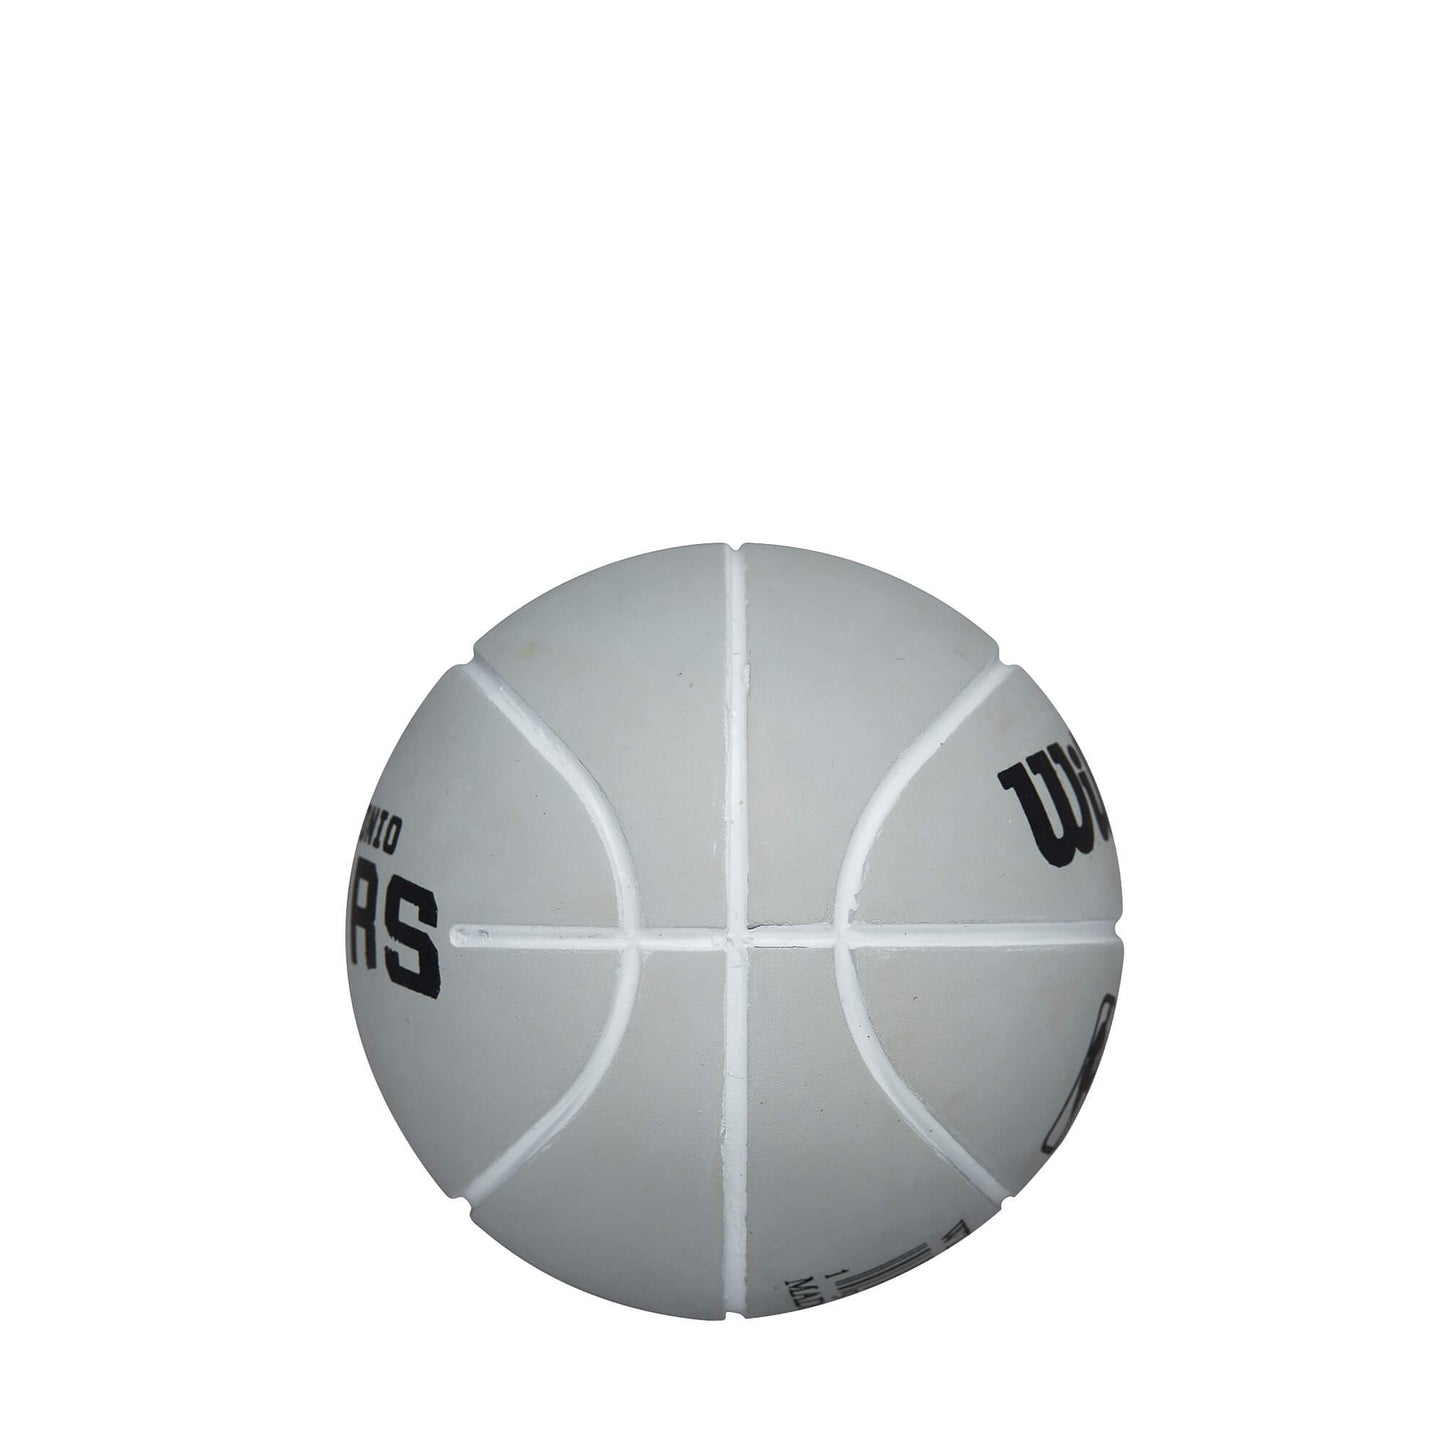 Wilson NBA Dribbler Basketball San Antonio Spurs (sz. super mini)